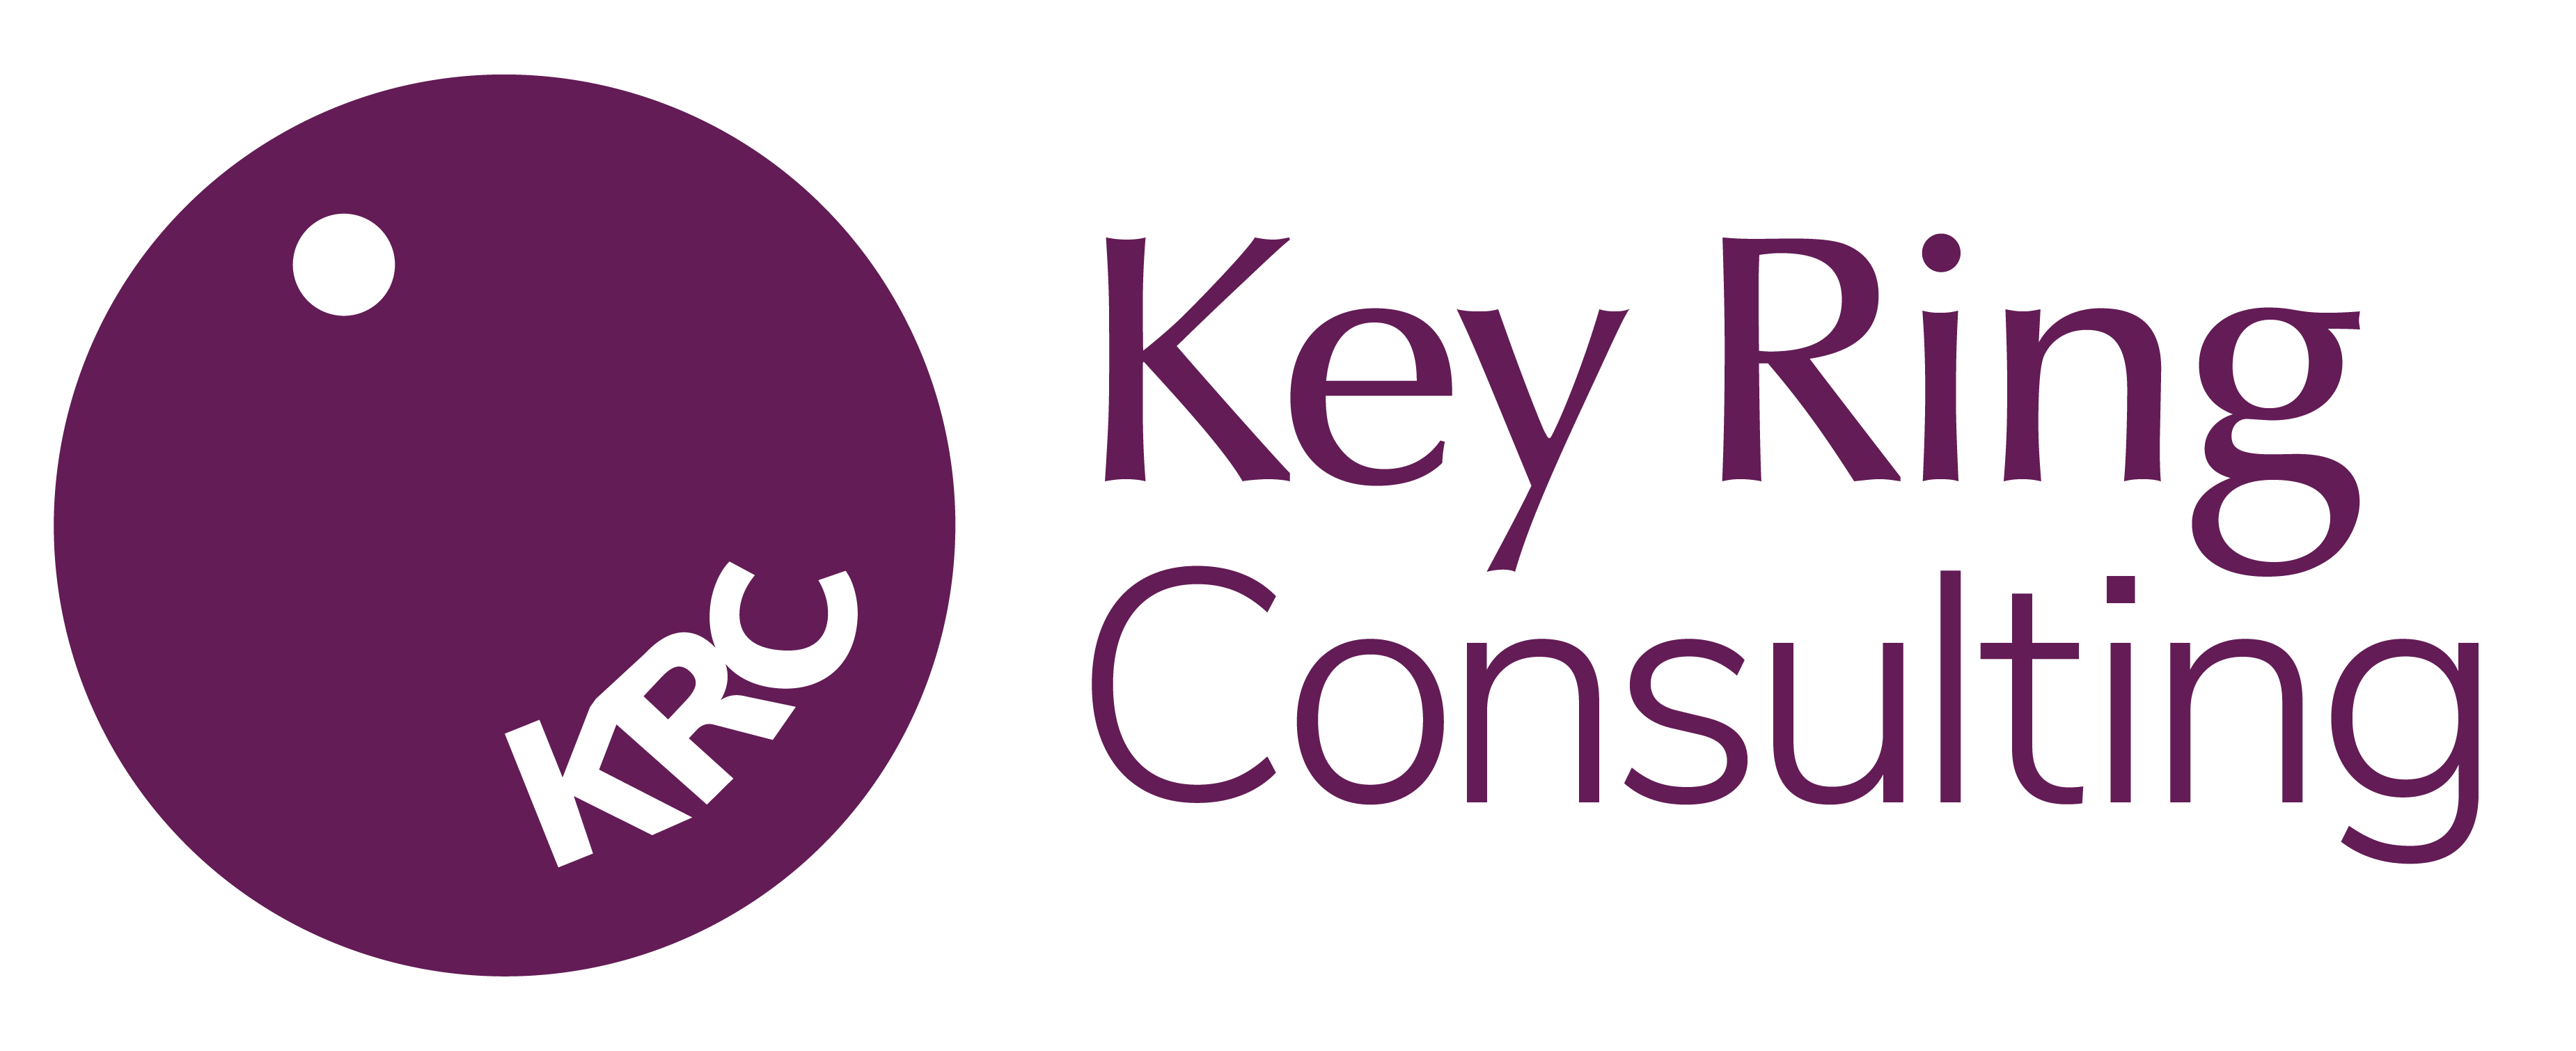 key ring consulting logo